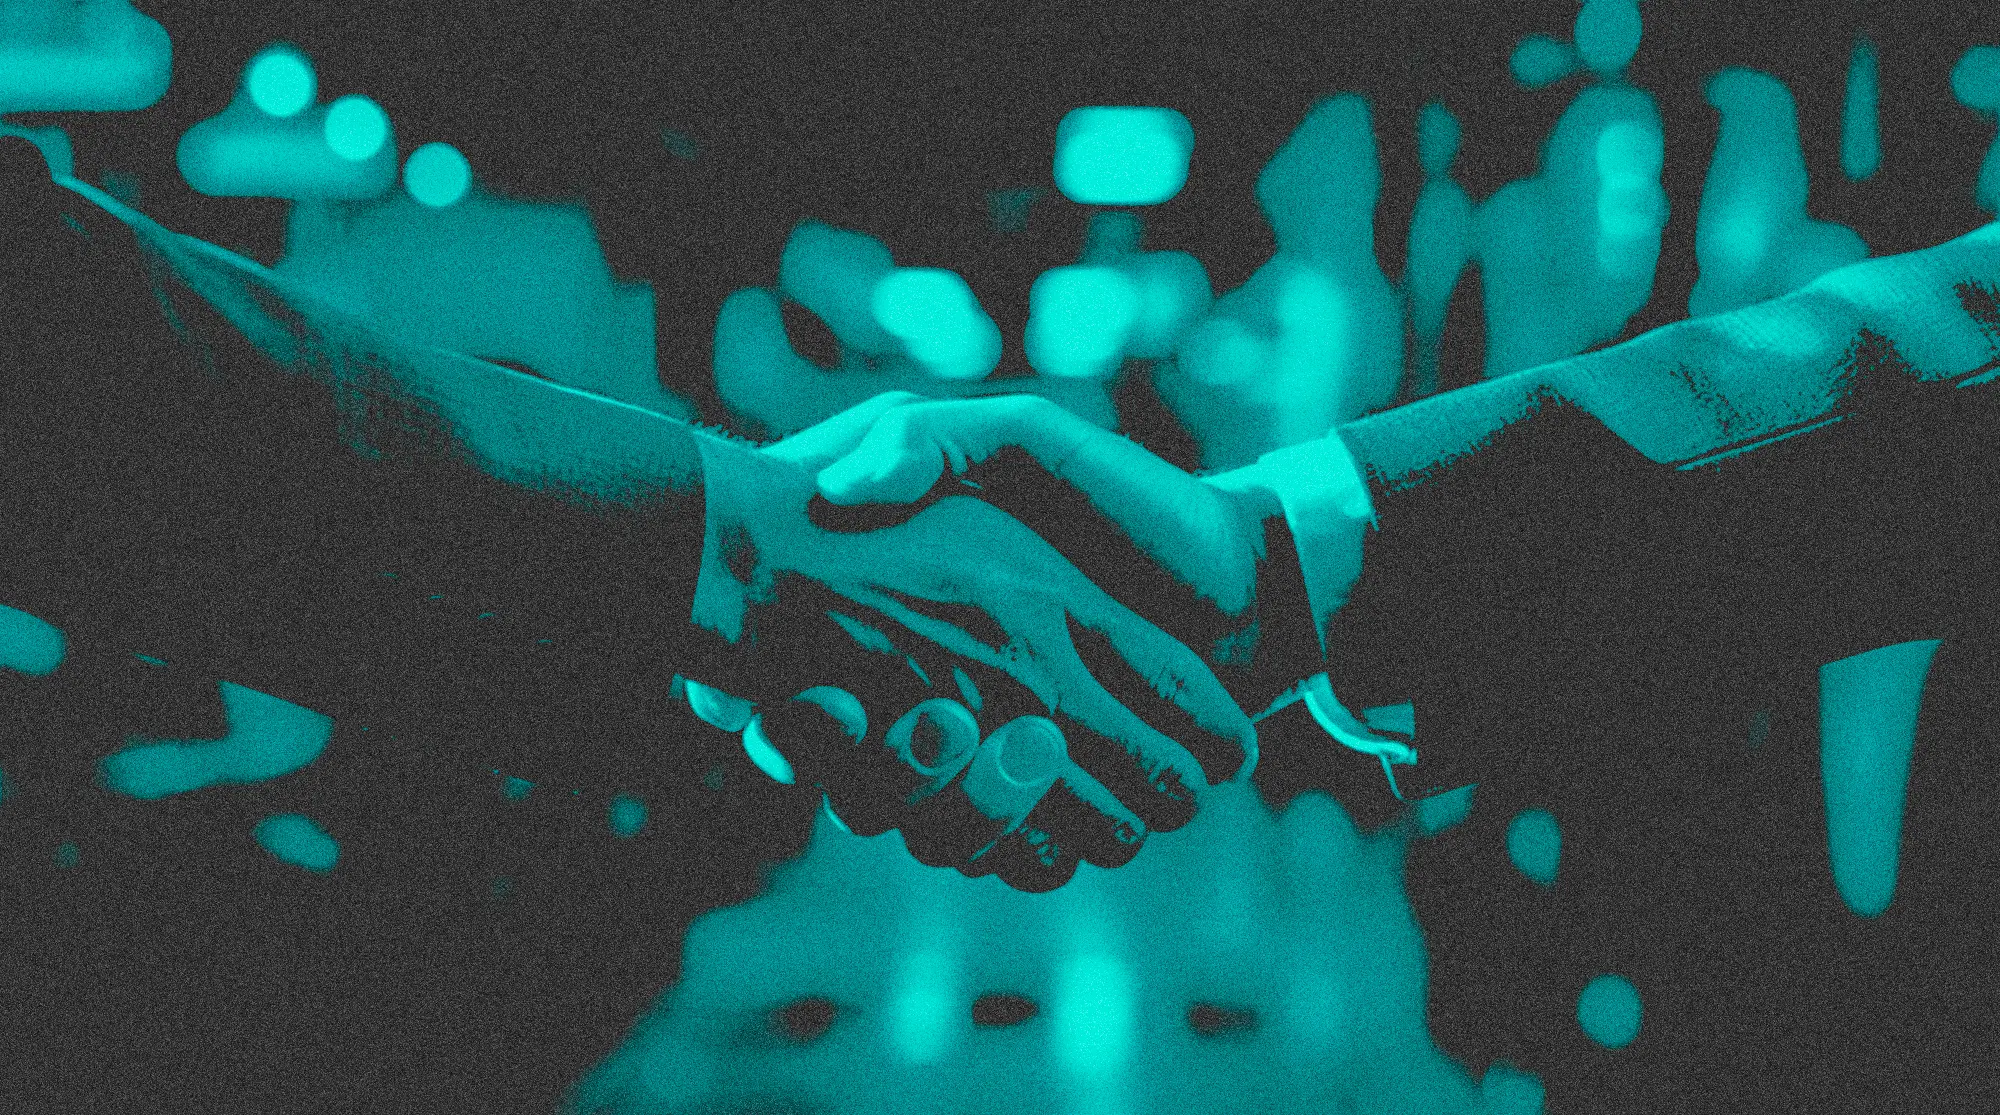 A handshake between business people illustrating a partnership